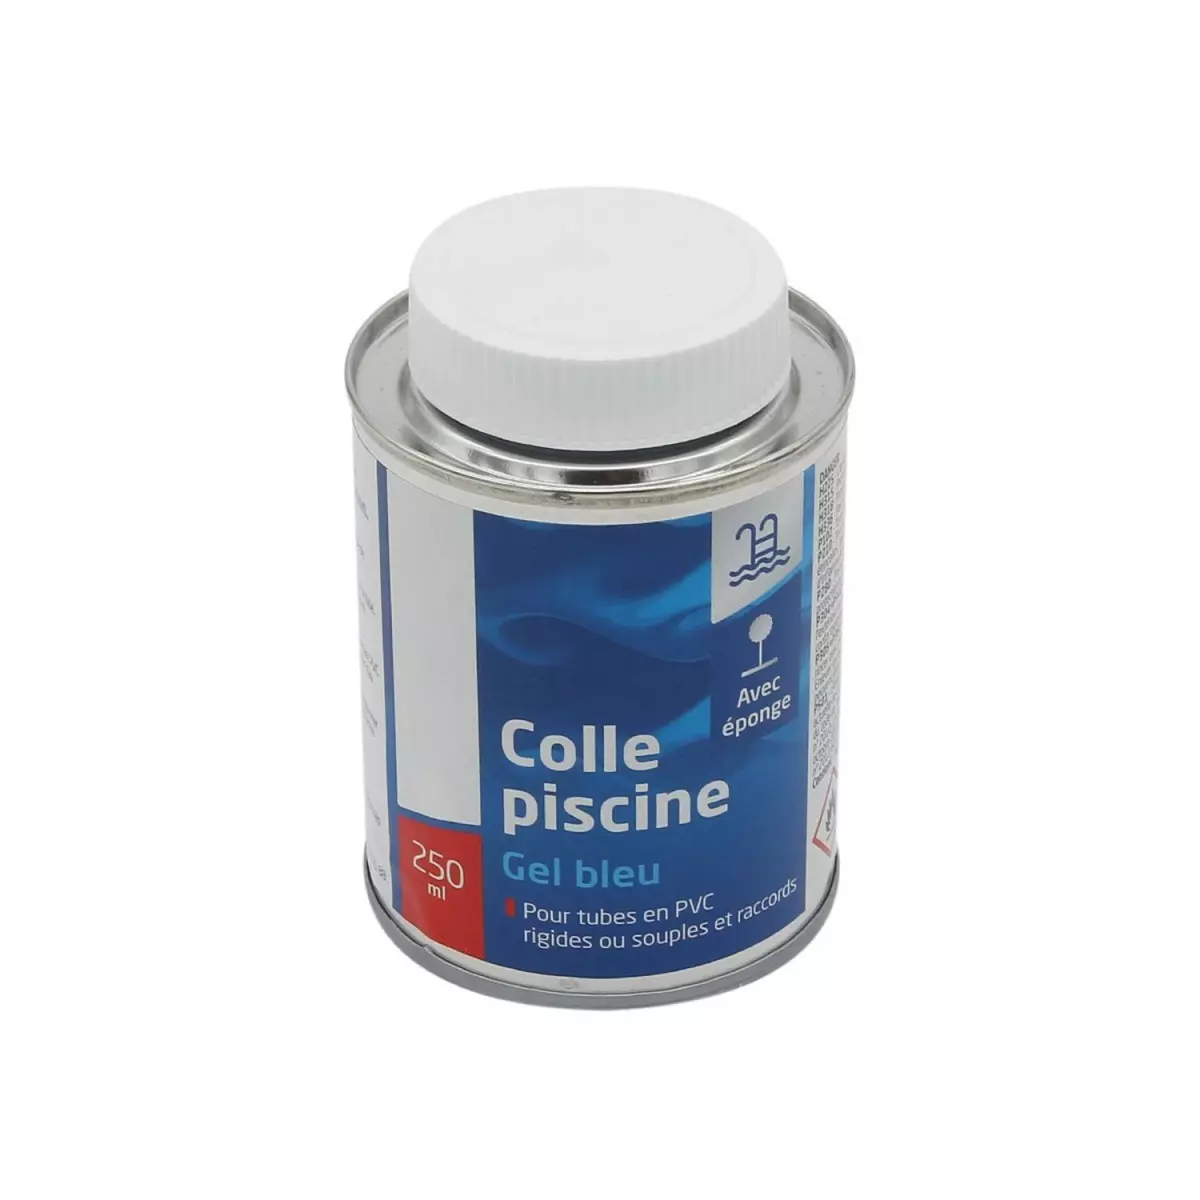 LINXOR Colle piscine avec éponge pour tube et raccord PVC - Gel bleu - 250 ml